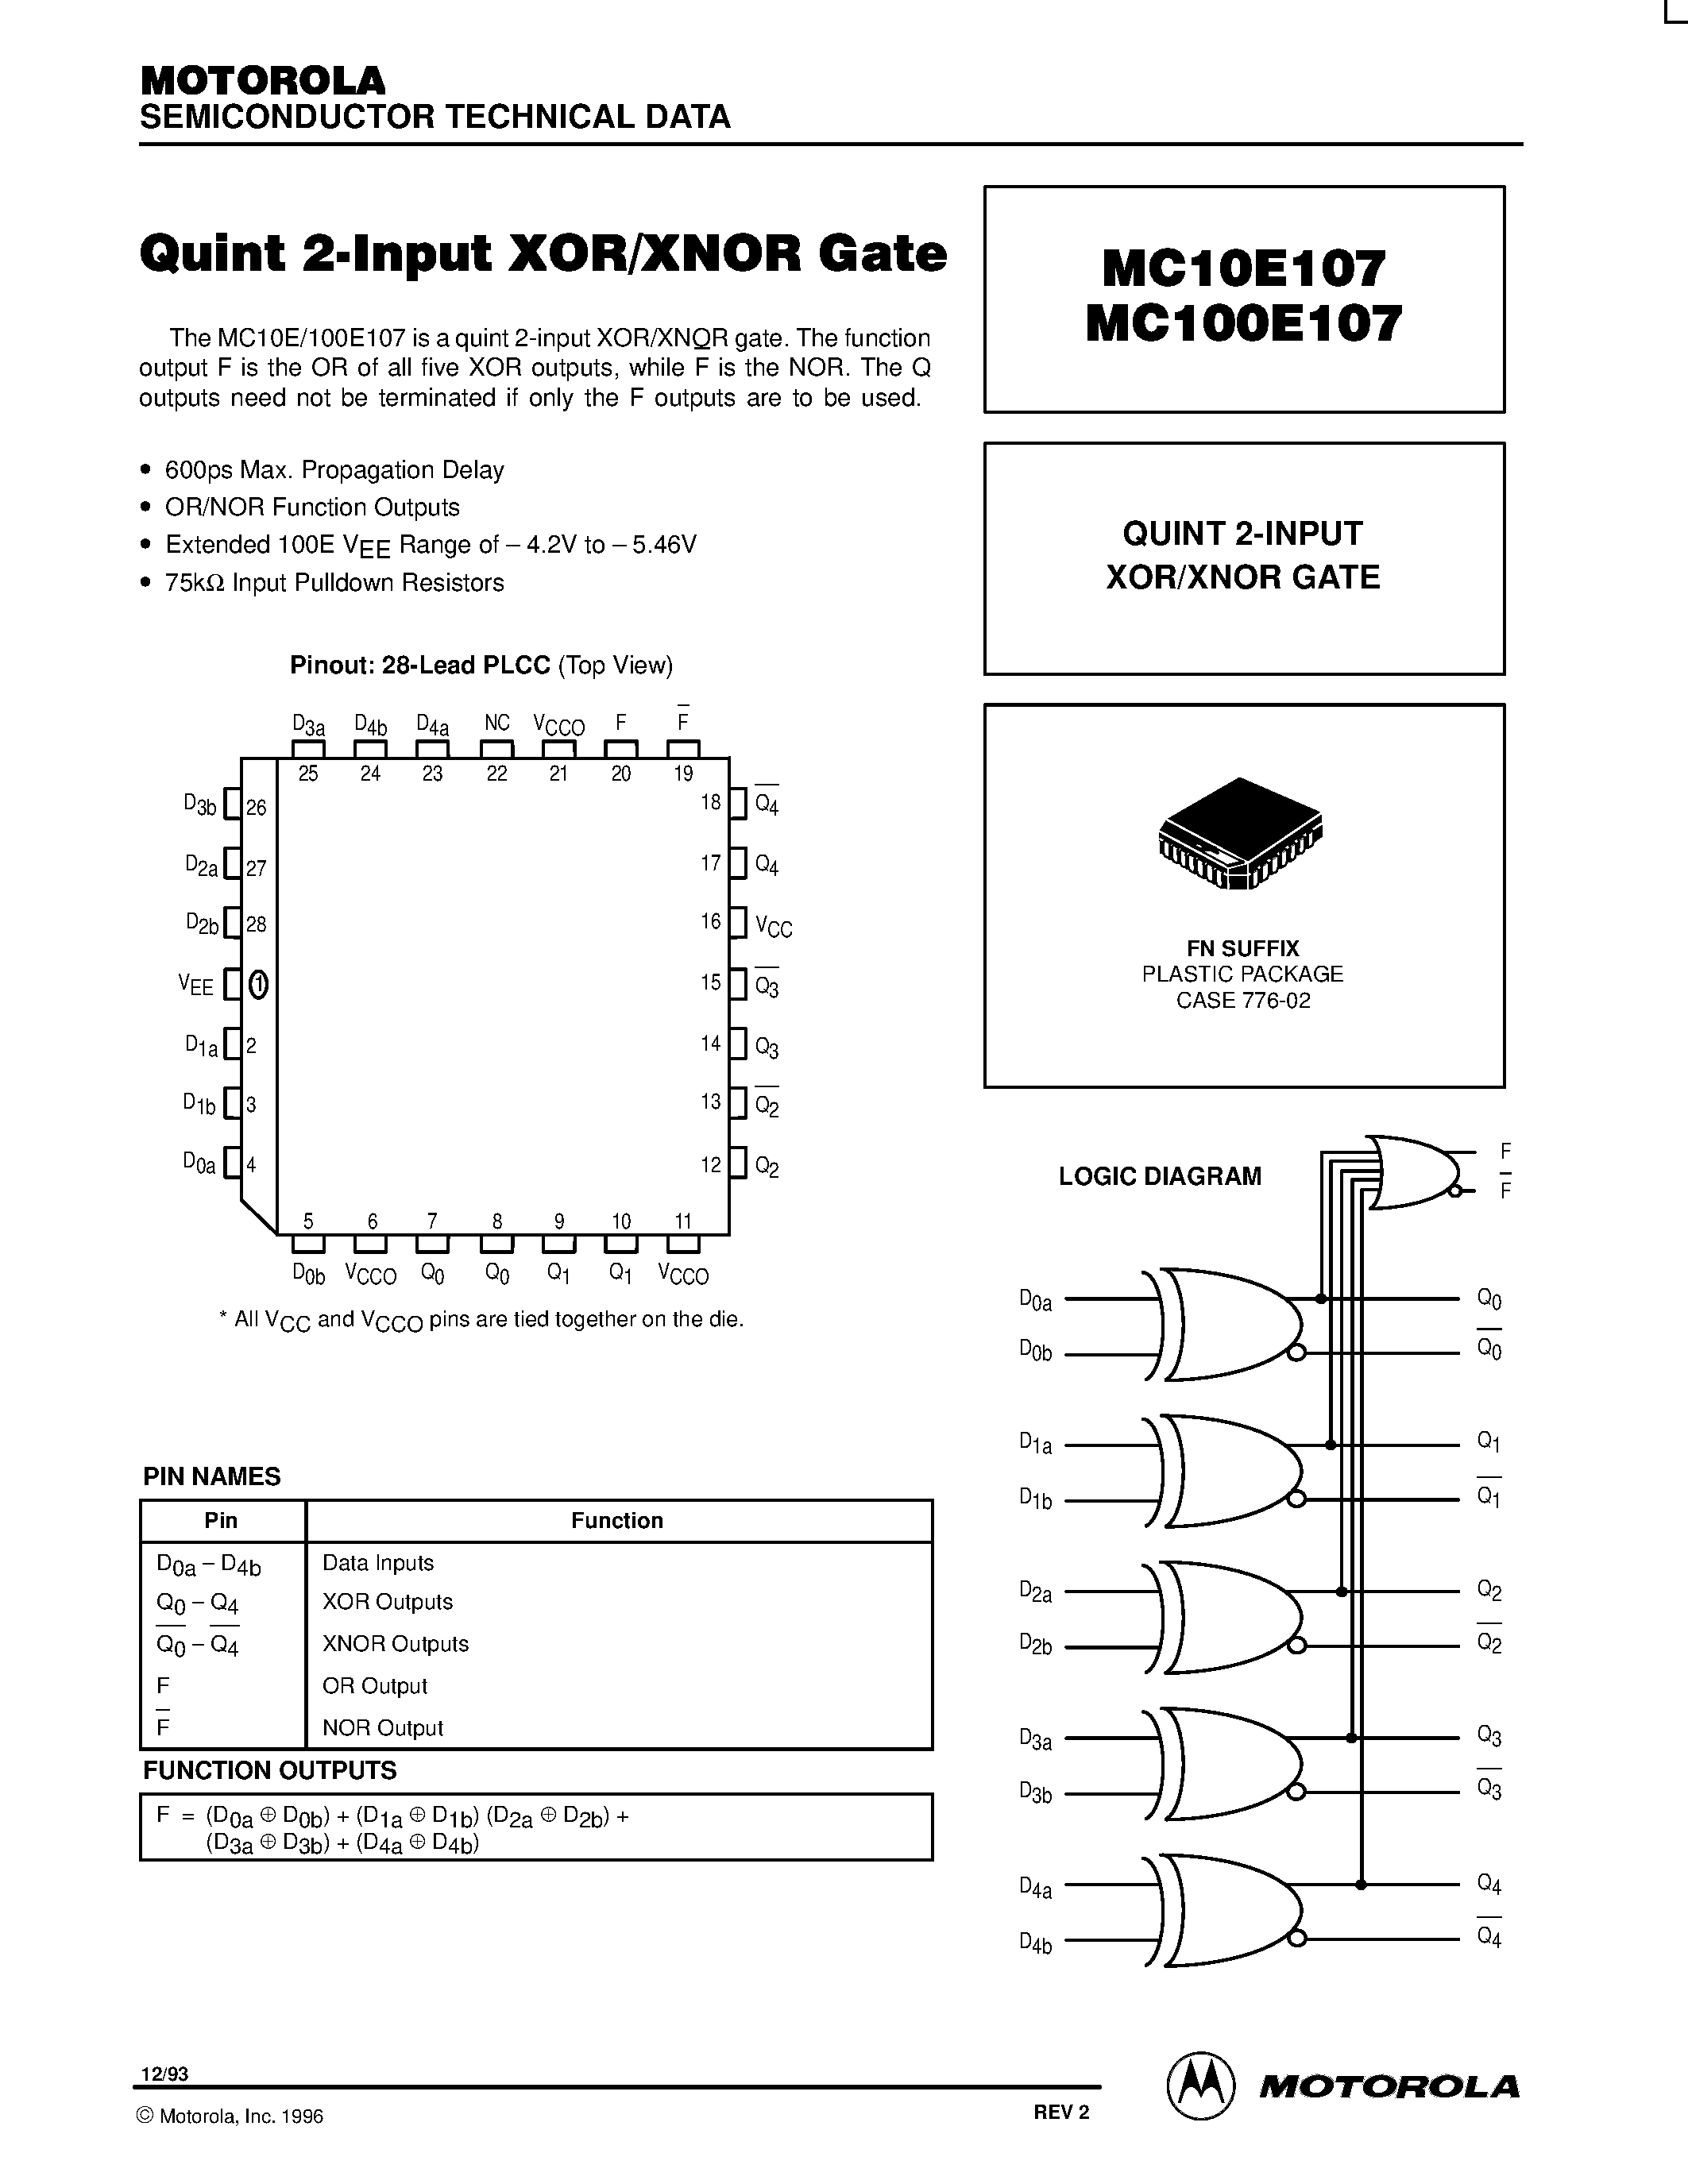 Datasheet MC100E107FN - QUINT 2-INPUT XOR/XNOR GATE page 1